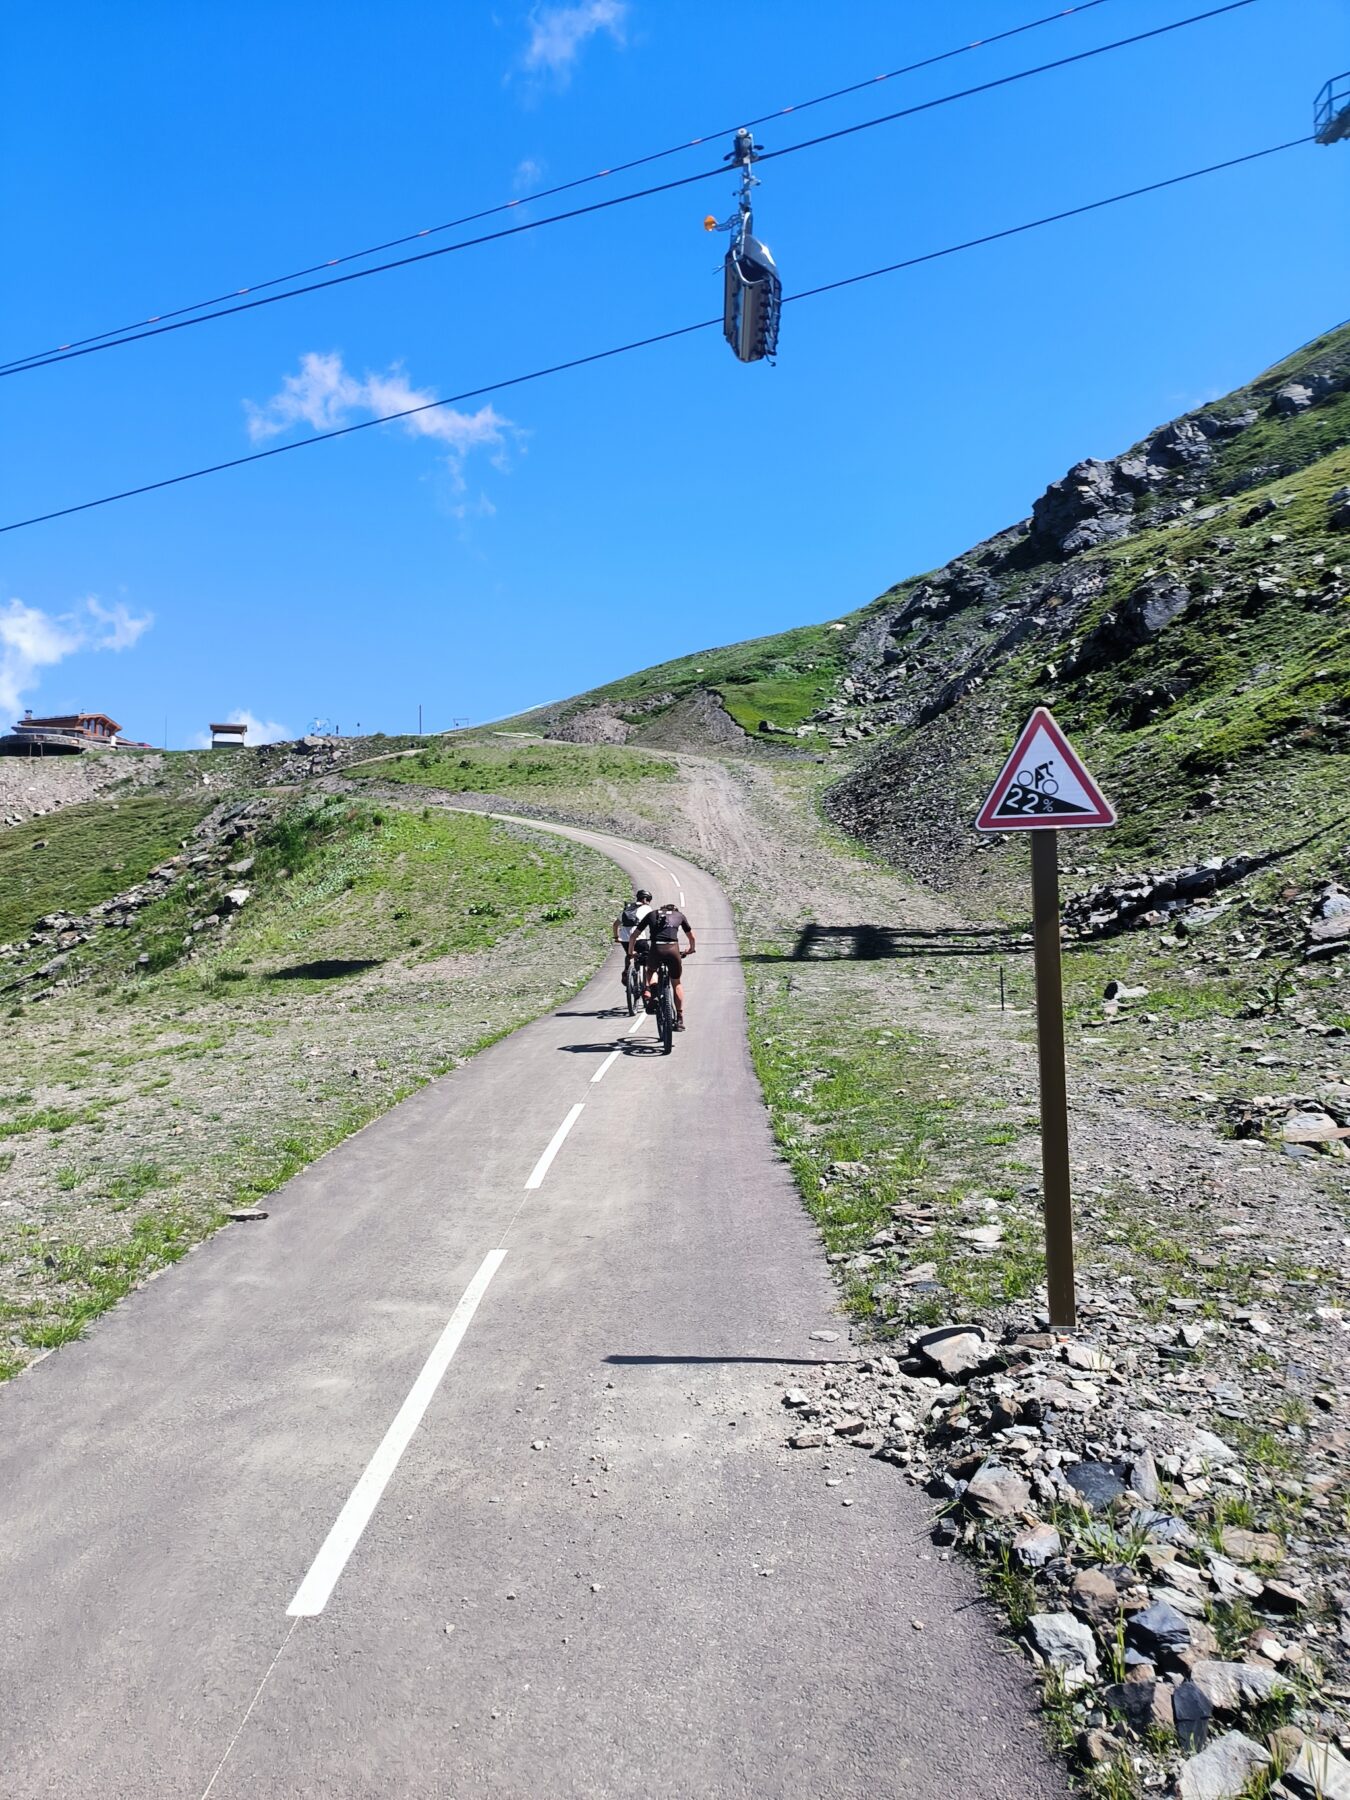 Stijl klimmen op col de Tougnète met de elecktrische mountainbike